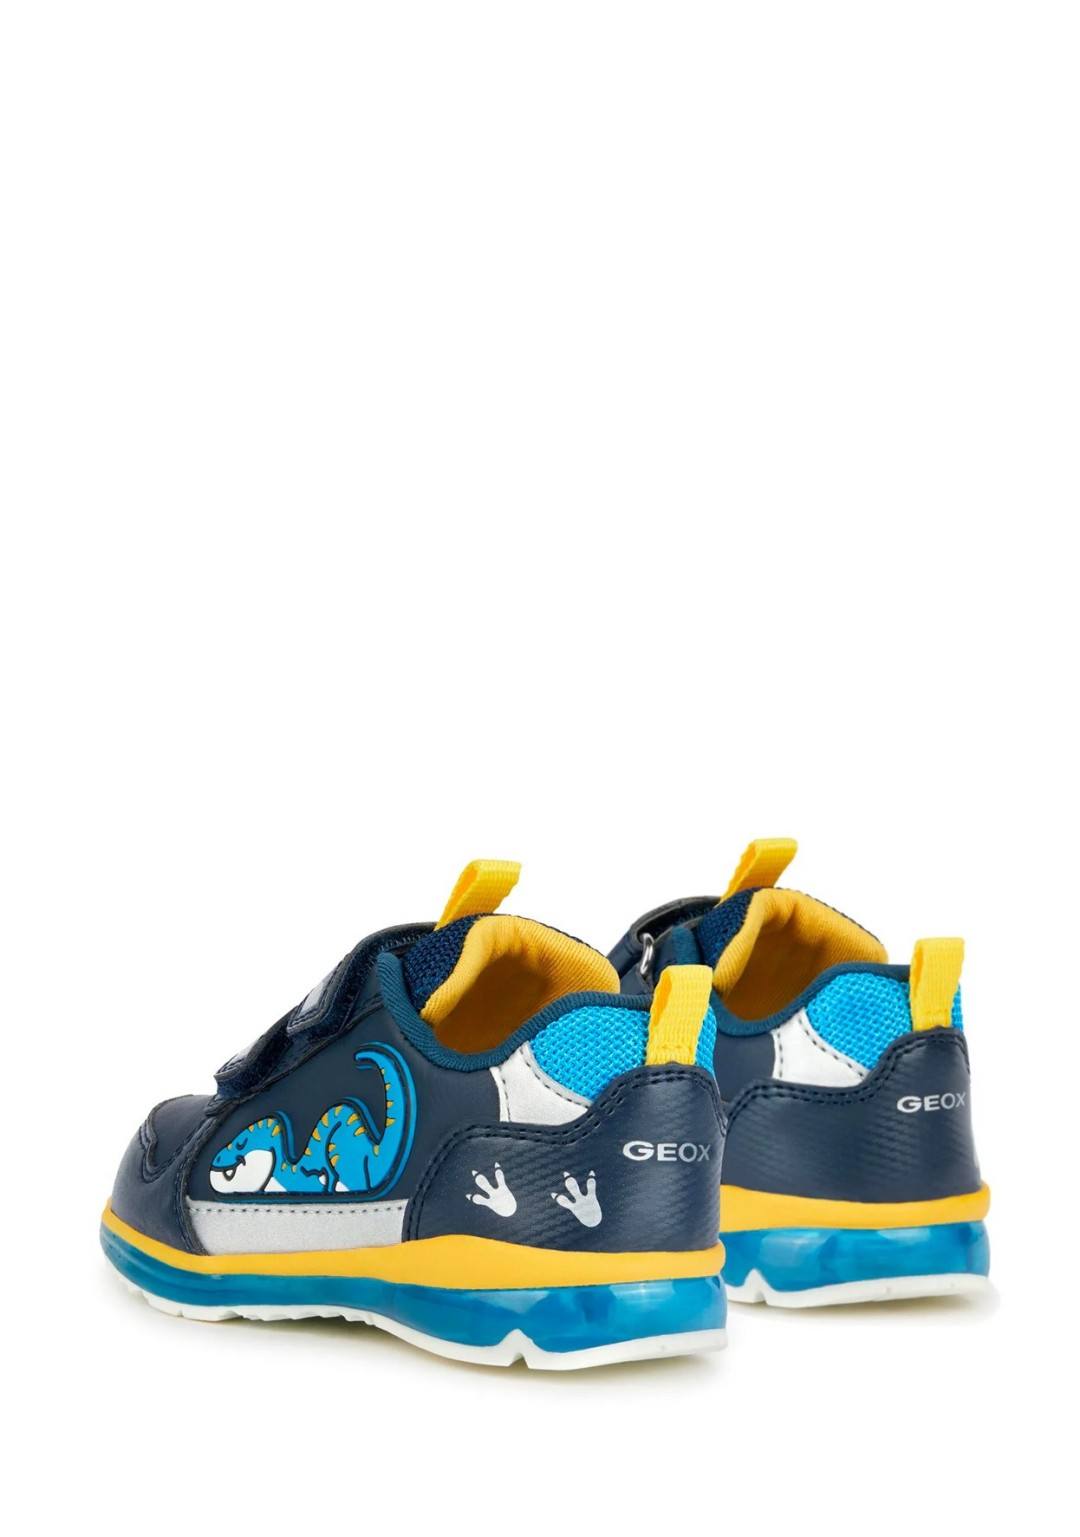 Geox - Sneaker DInosauro - Bimbo - B3584A